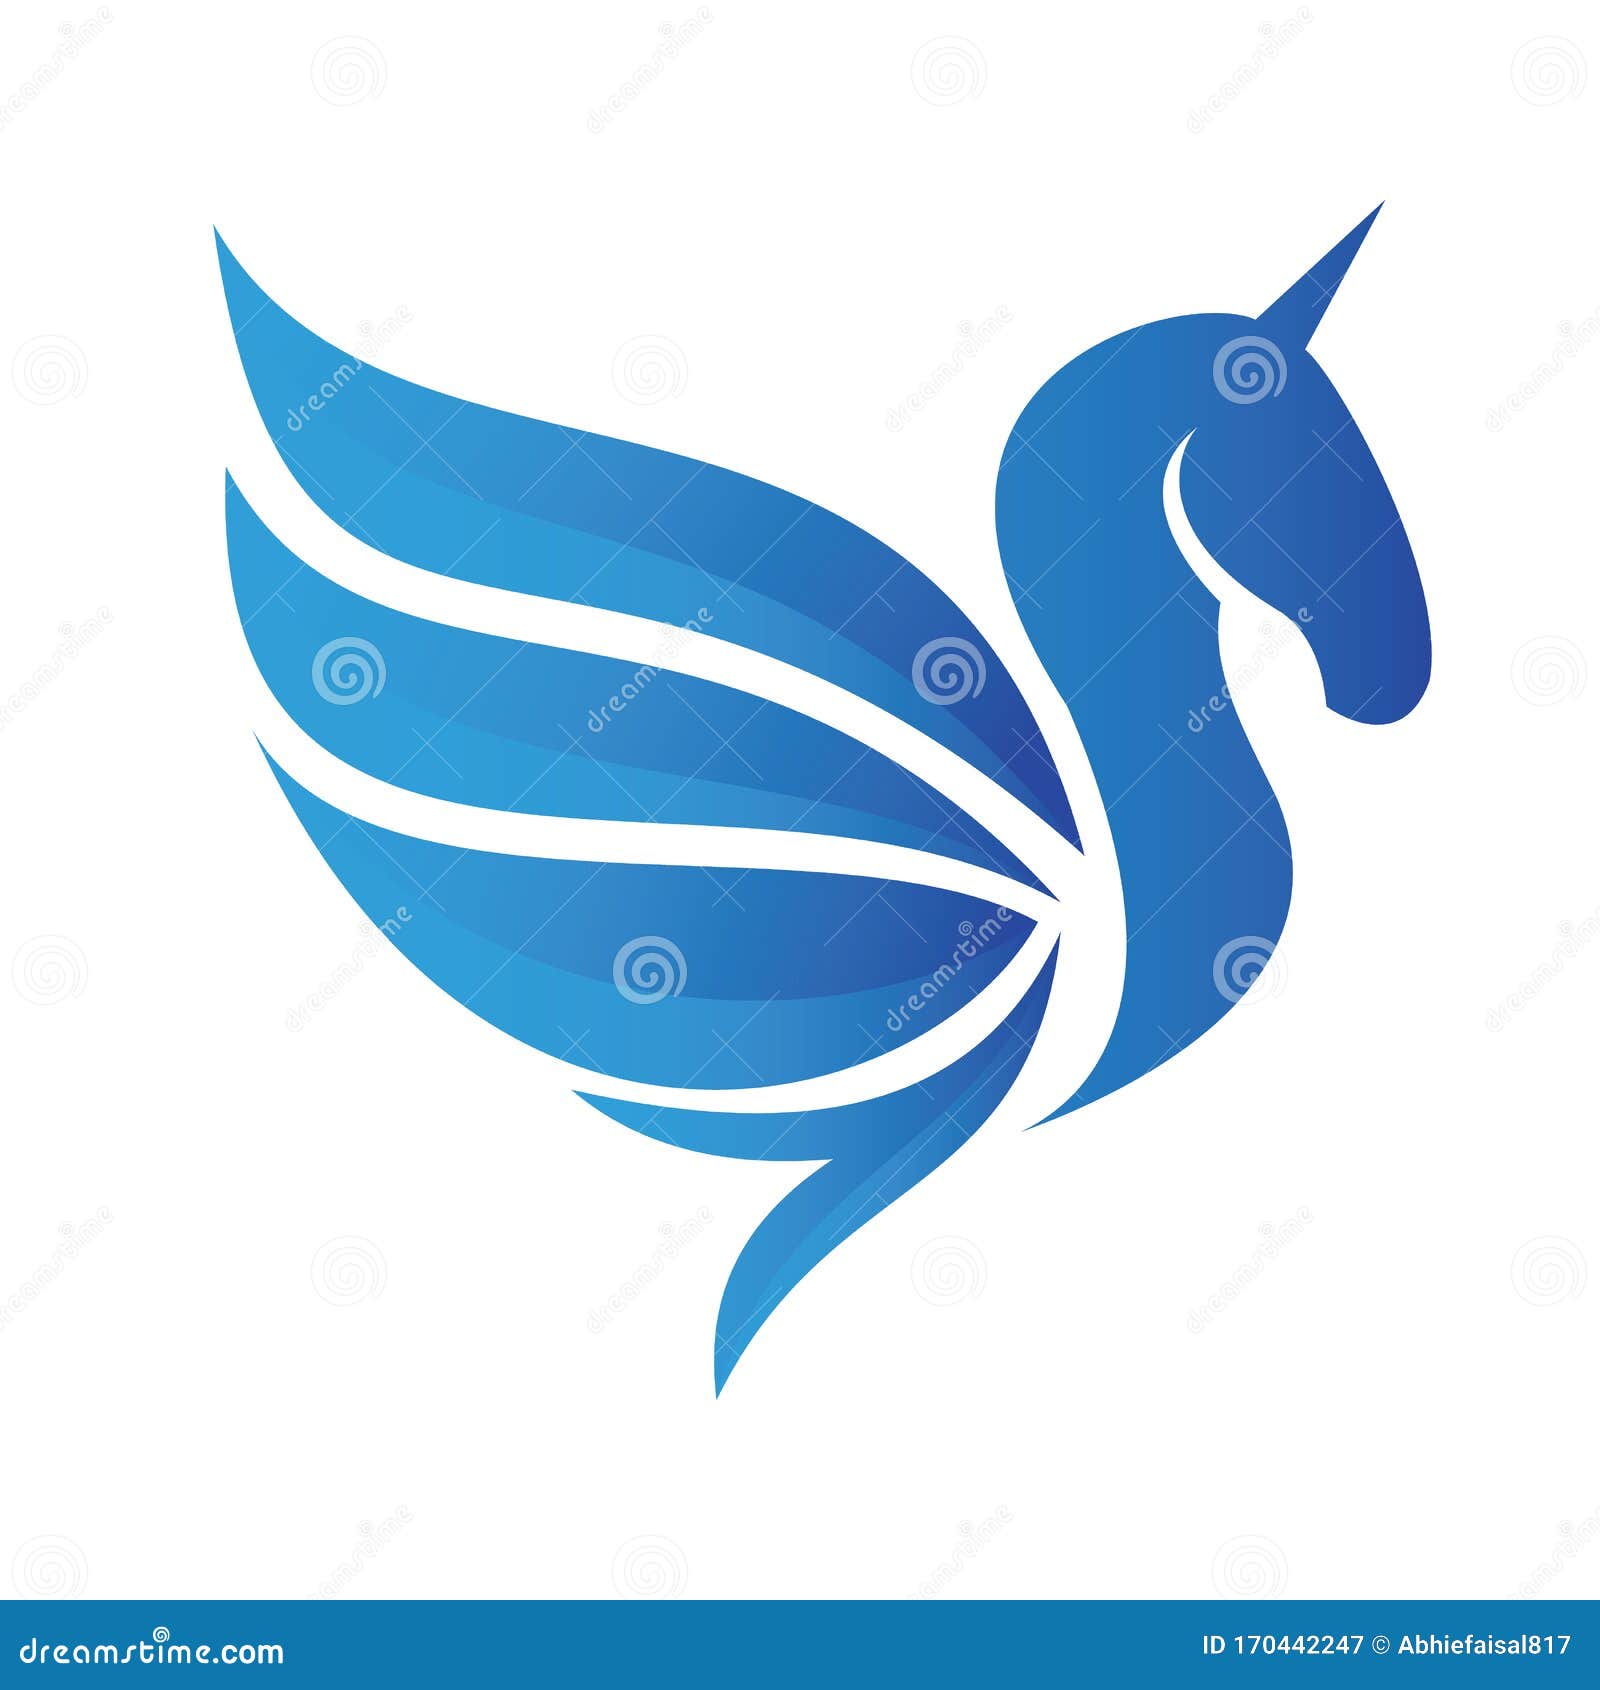 Pegasus Symbol Stock Illustrations 2 638 Pegasus Symbol Stock Illustrations Vectors Clipart Dreamstime